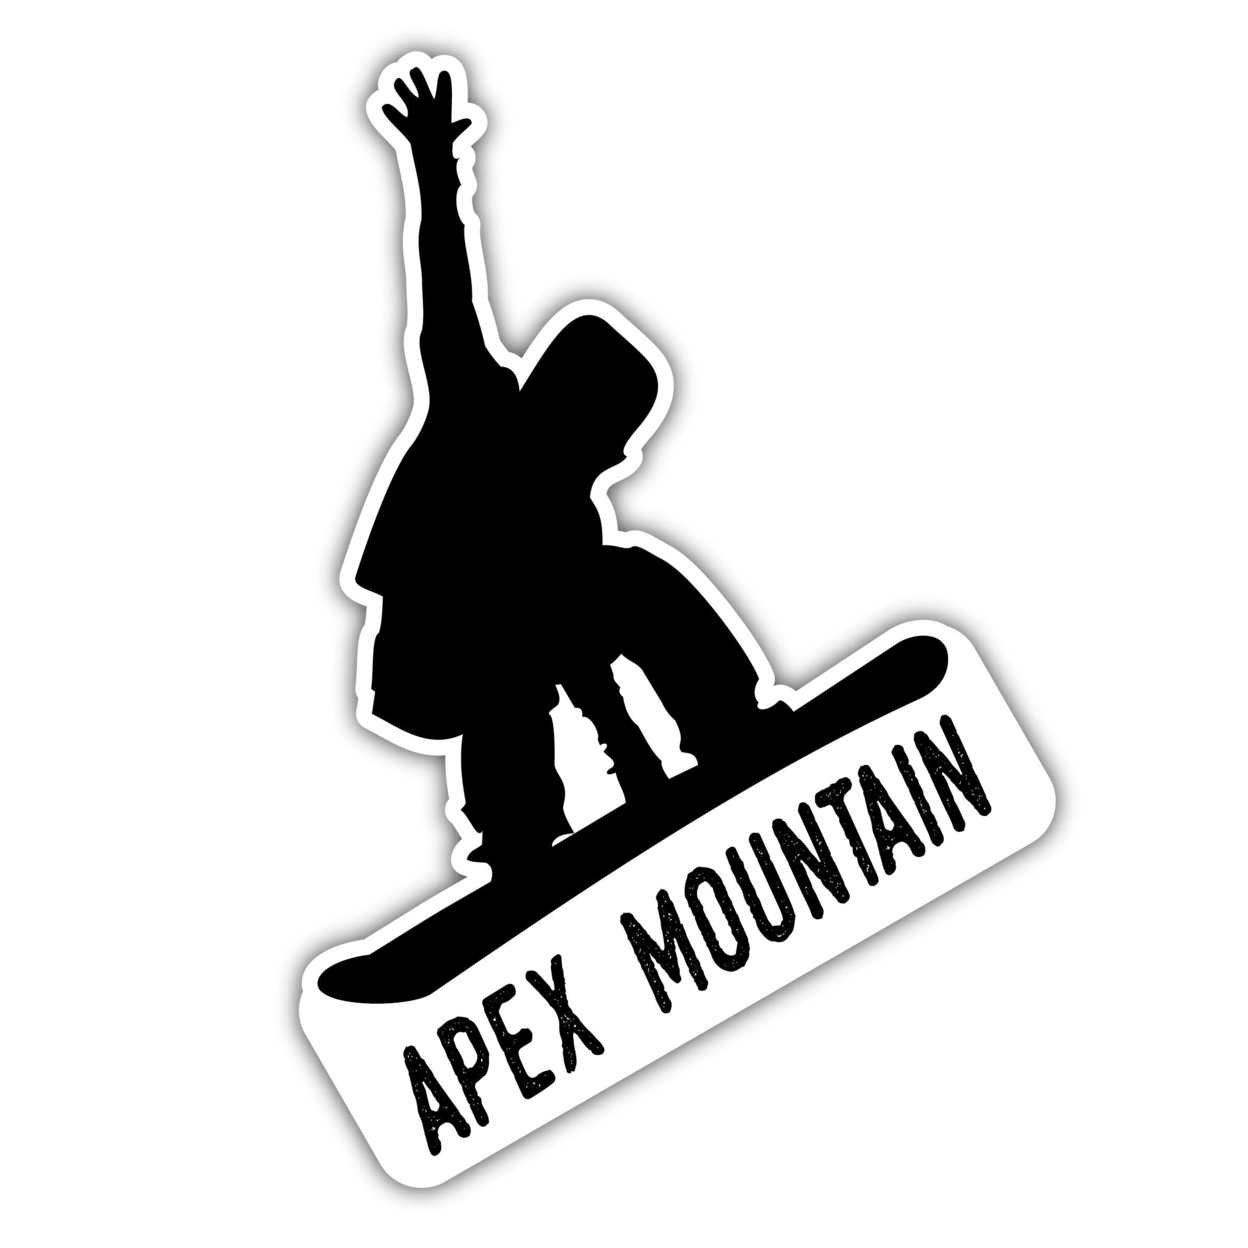 Apex Mountain British Columbia Ski Adventures Souvenir Approximately 5 X 2.5-Inch Vinyl Decal Sticker Goggle Design